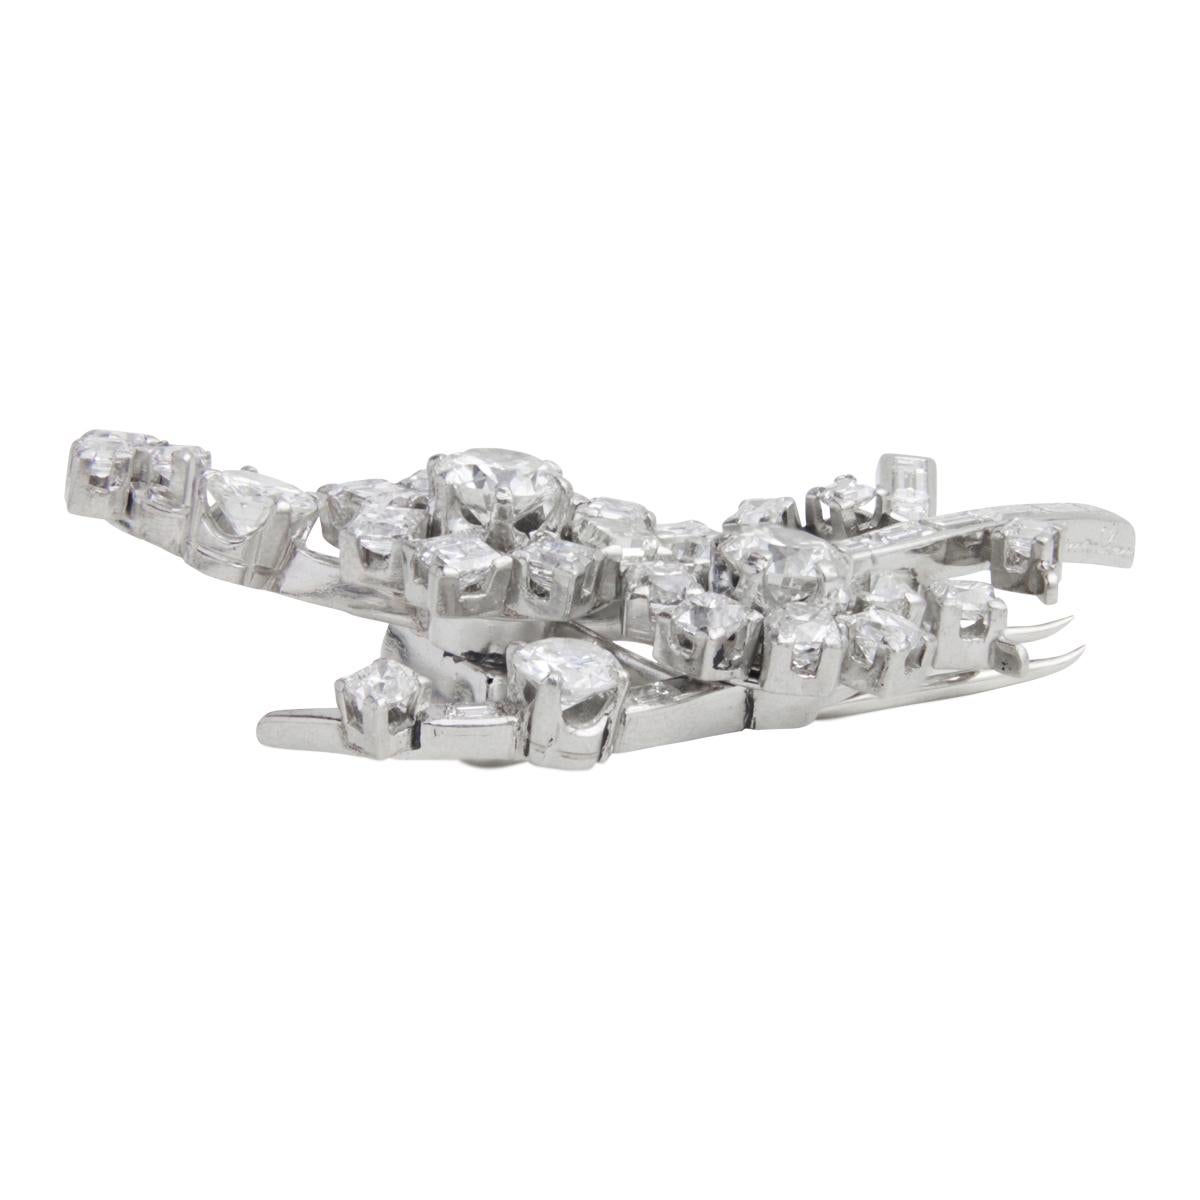 Romantic 7.50 Carat Mixed Cut Diamond Spray Pin Brooch For Sale